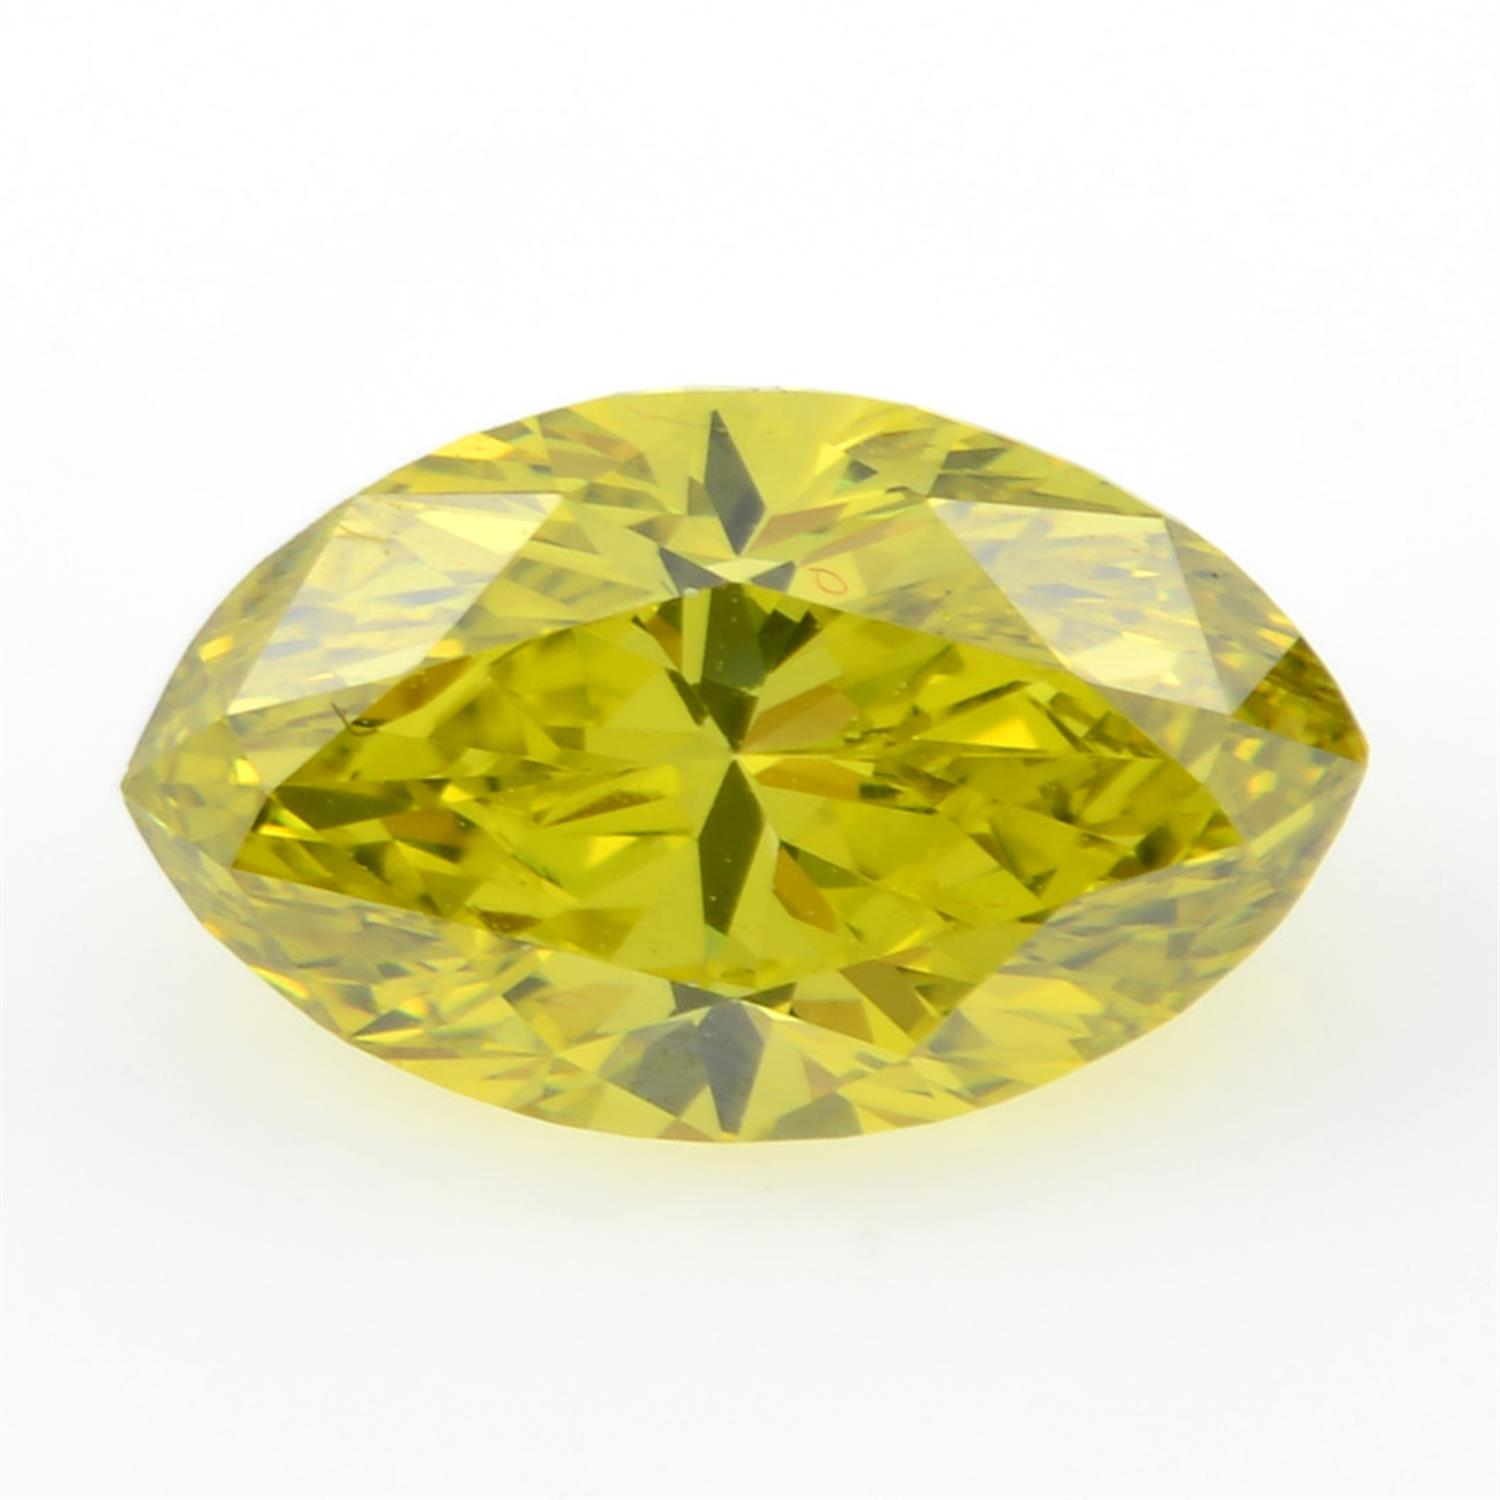 STUART DEVLIN STOCK - A marquise shape 'yellow' diamond, weighing 1.34ct